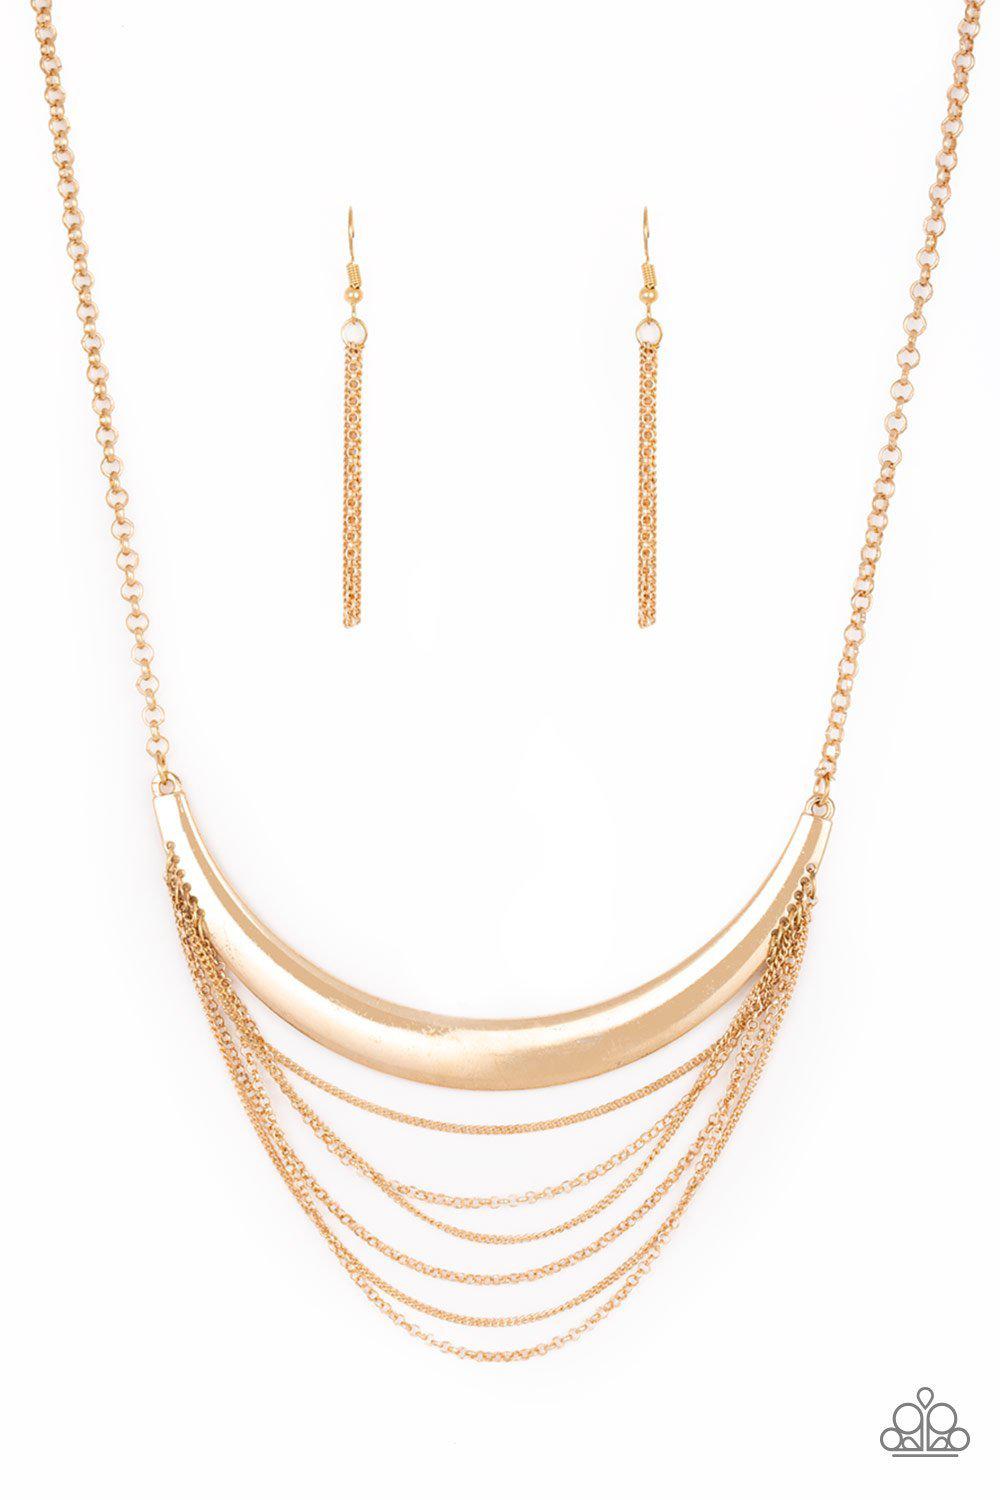 Way Wayfarer Gold Necklace - Paparazzi Accessories - lightbox -CarasShop.com - $5 Jewelry by Cara Jewels